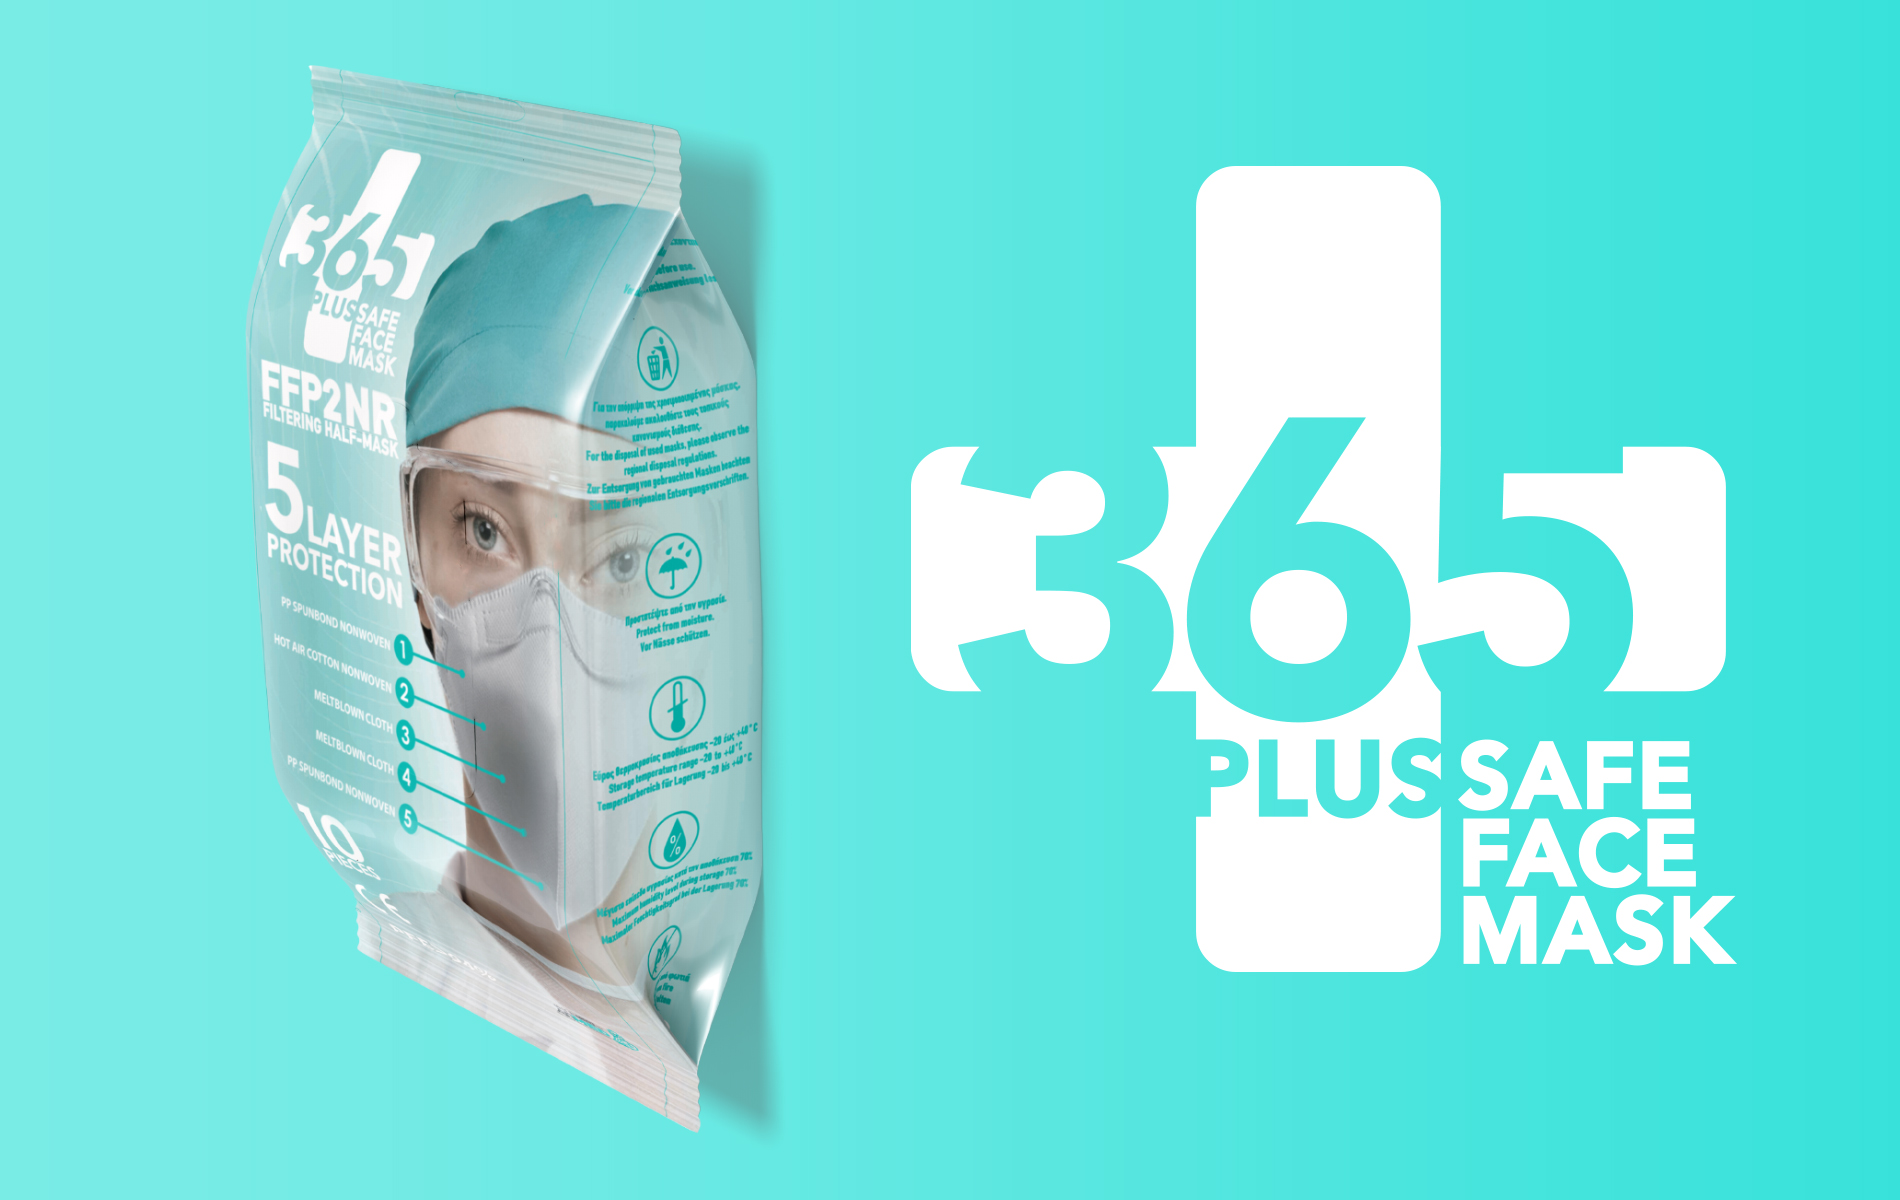 365 plus ffp2 mask 10 item logo packaging design by designideas